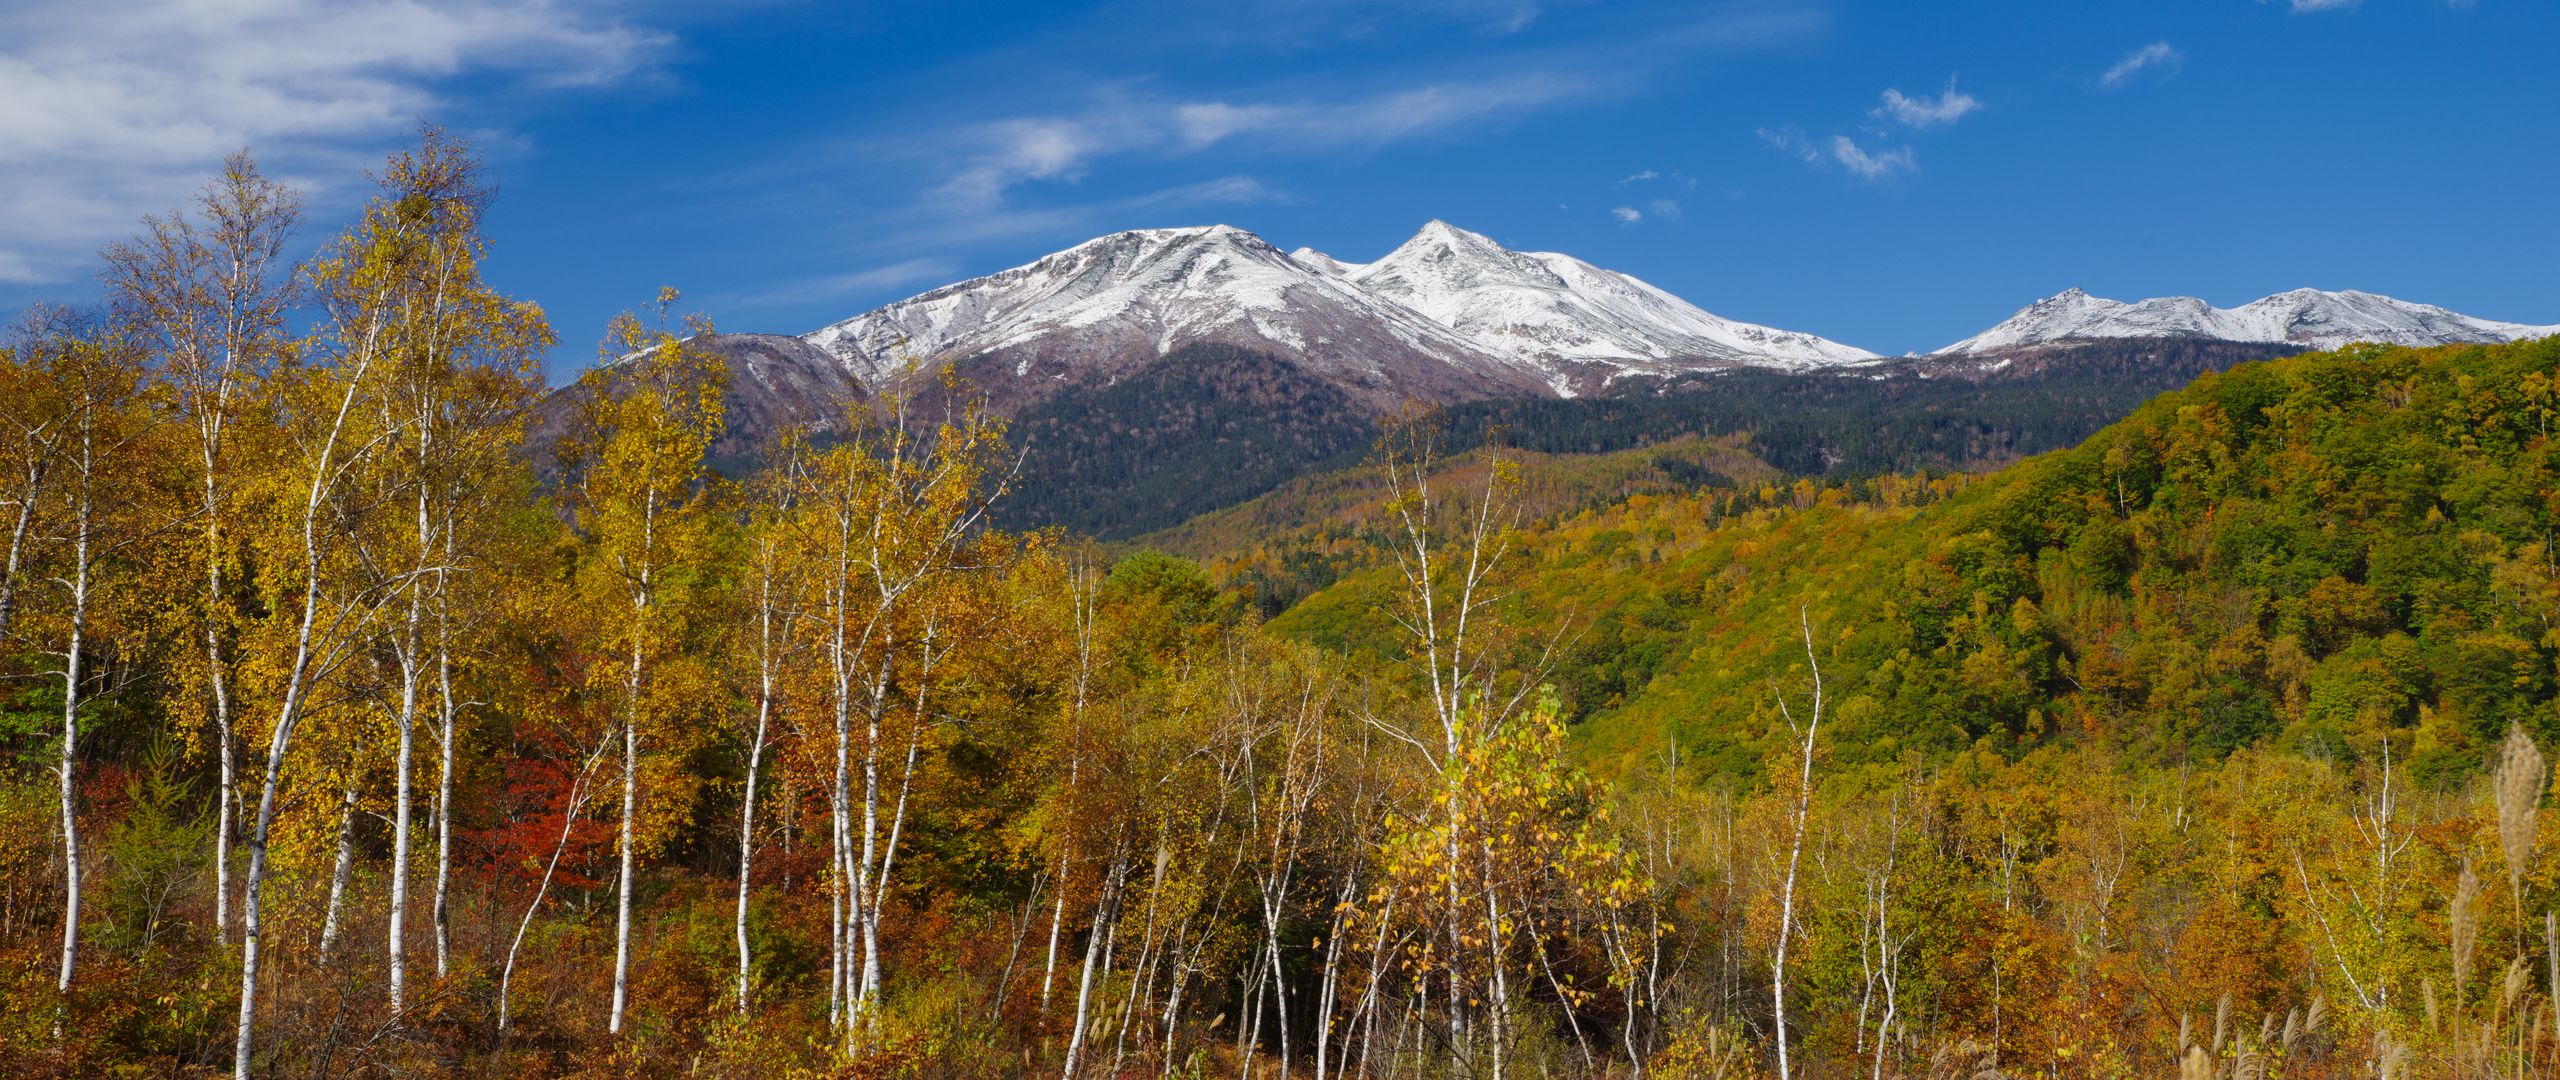 Download wallpaper 2560x1080 mountain, peak, forest, landscape dual